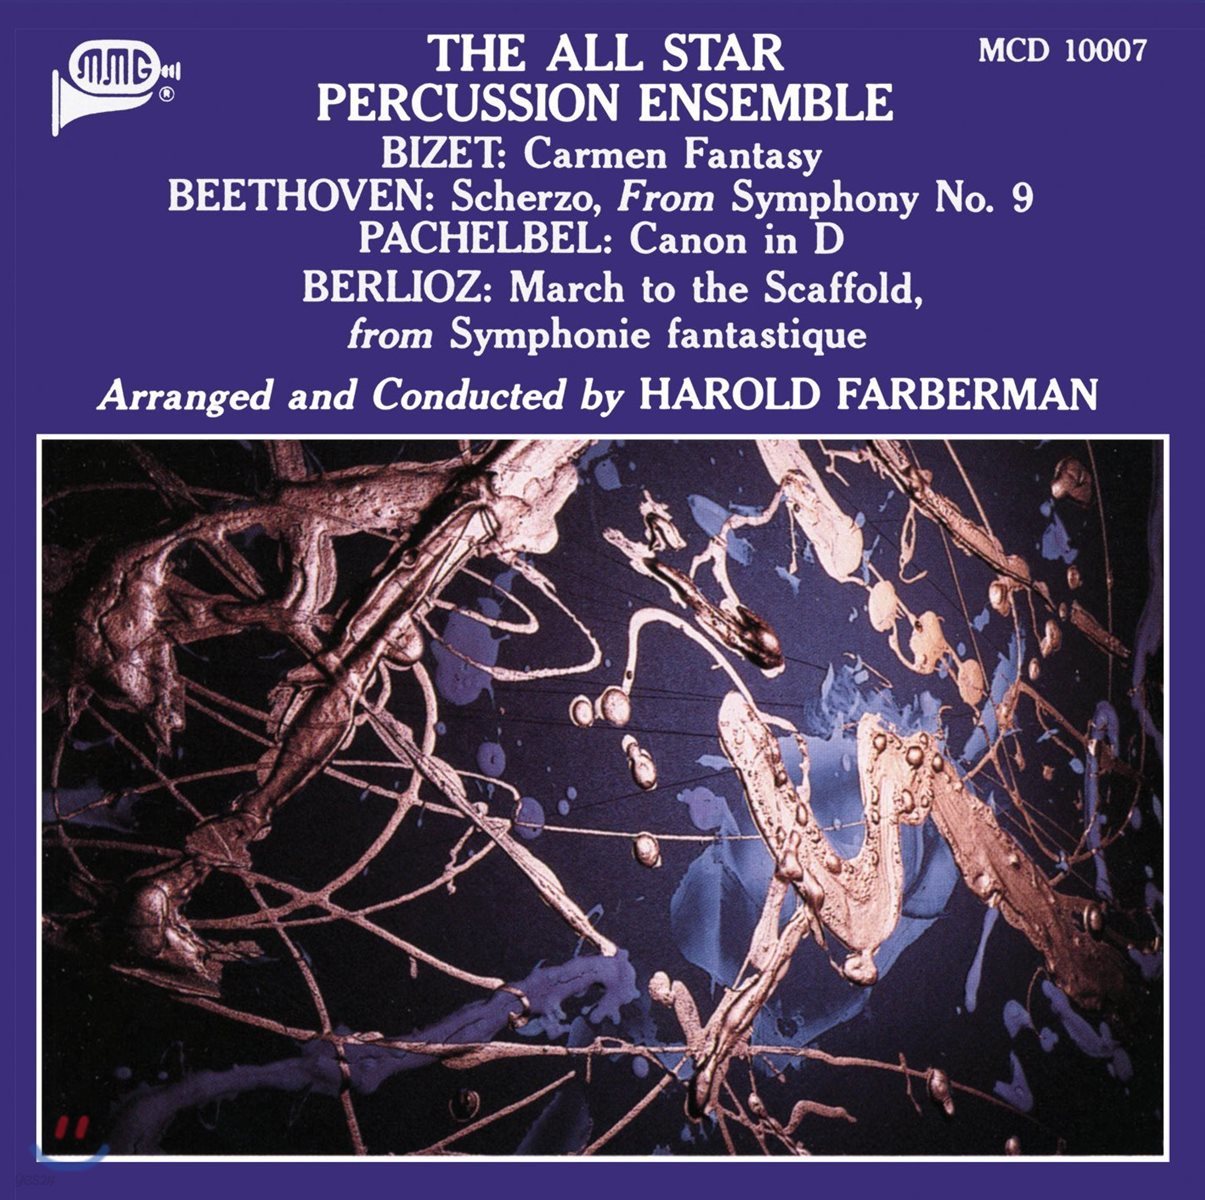 Harold Farberman 비제: 카르멘 환상곡 / 파헬벨: 캐논 / 베토벤: 교향곡 9번 중 '스케르초' / 베를리오즈: 교수대로의 행진 [타악기 편곡반] (The All Star Percussion Ensemble)